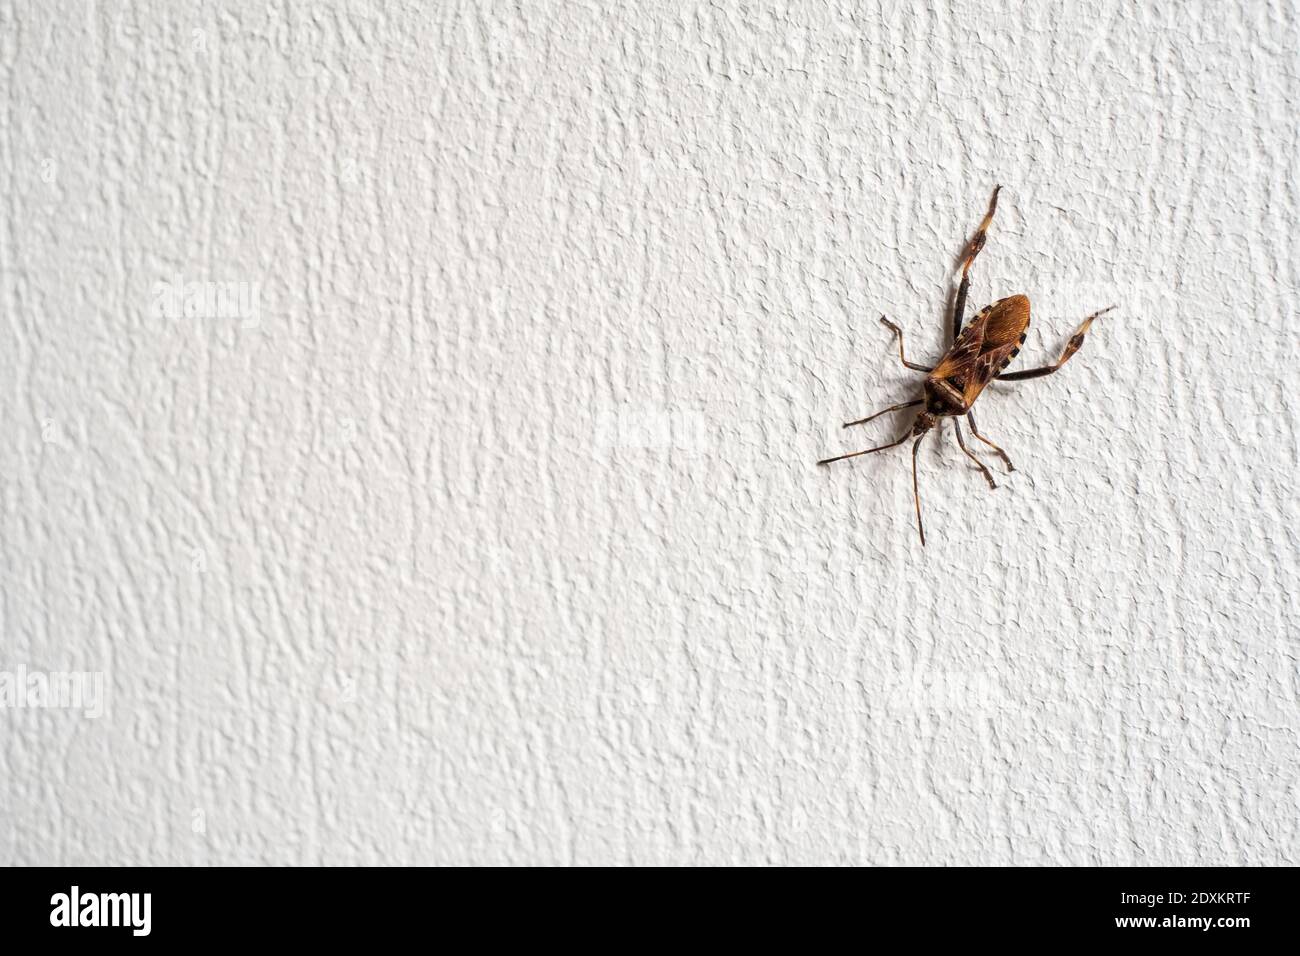 Bug crawling on rough wall Stock Photo - Alamy